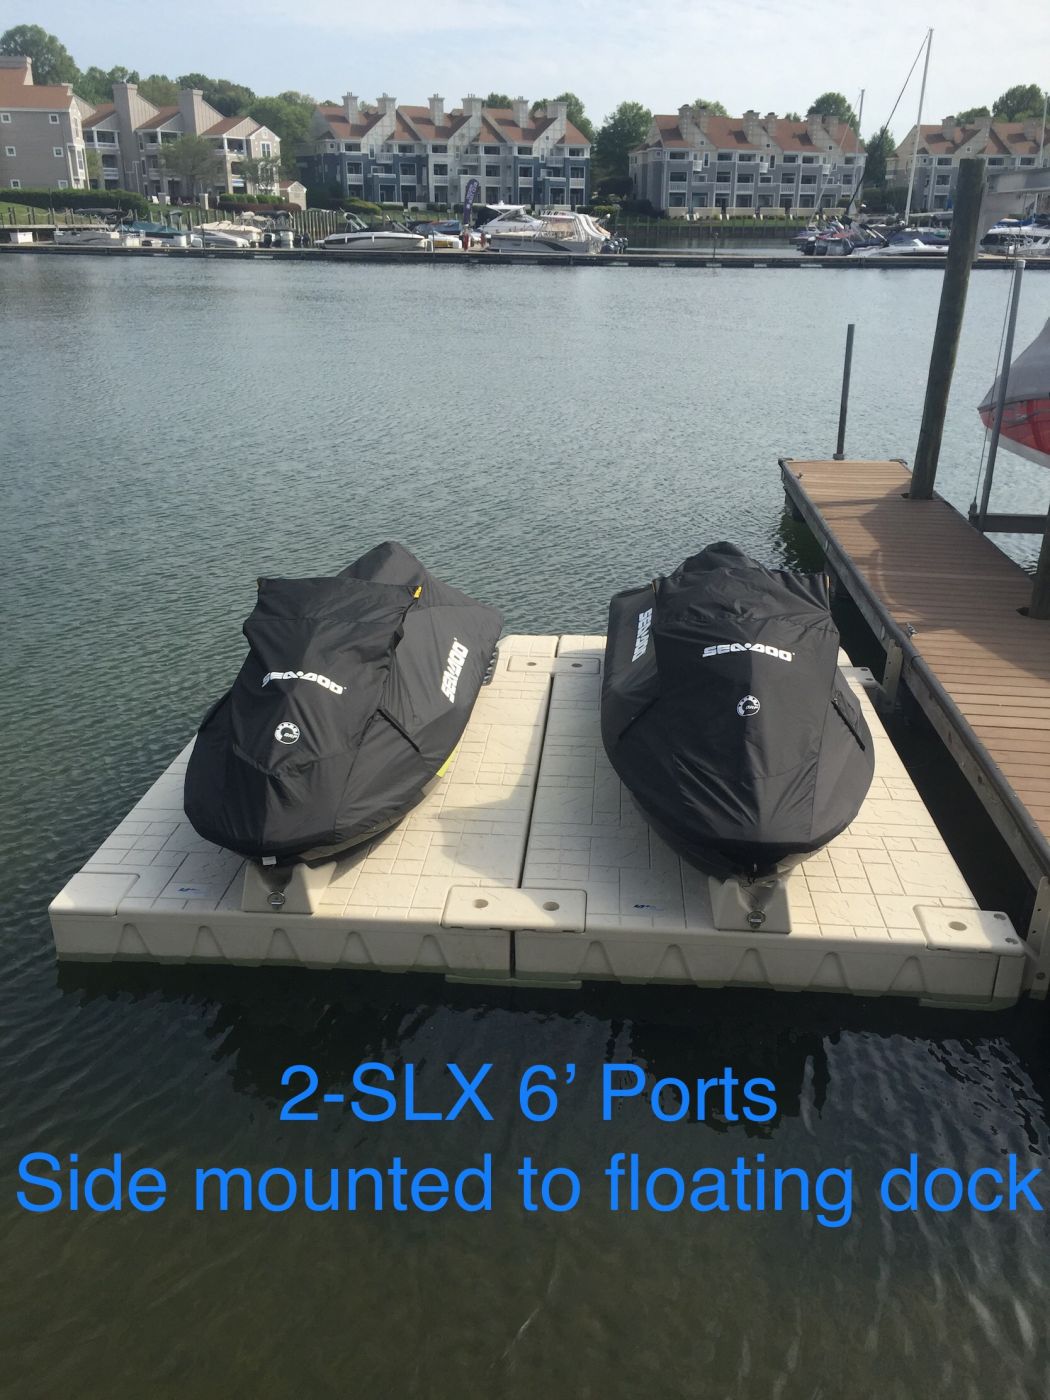 2-SLX 6' Ports installation